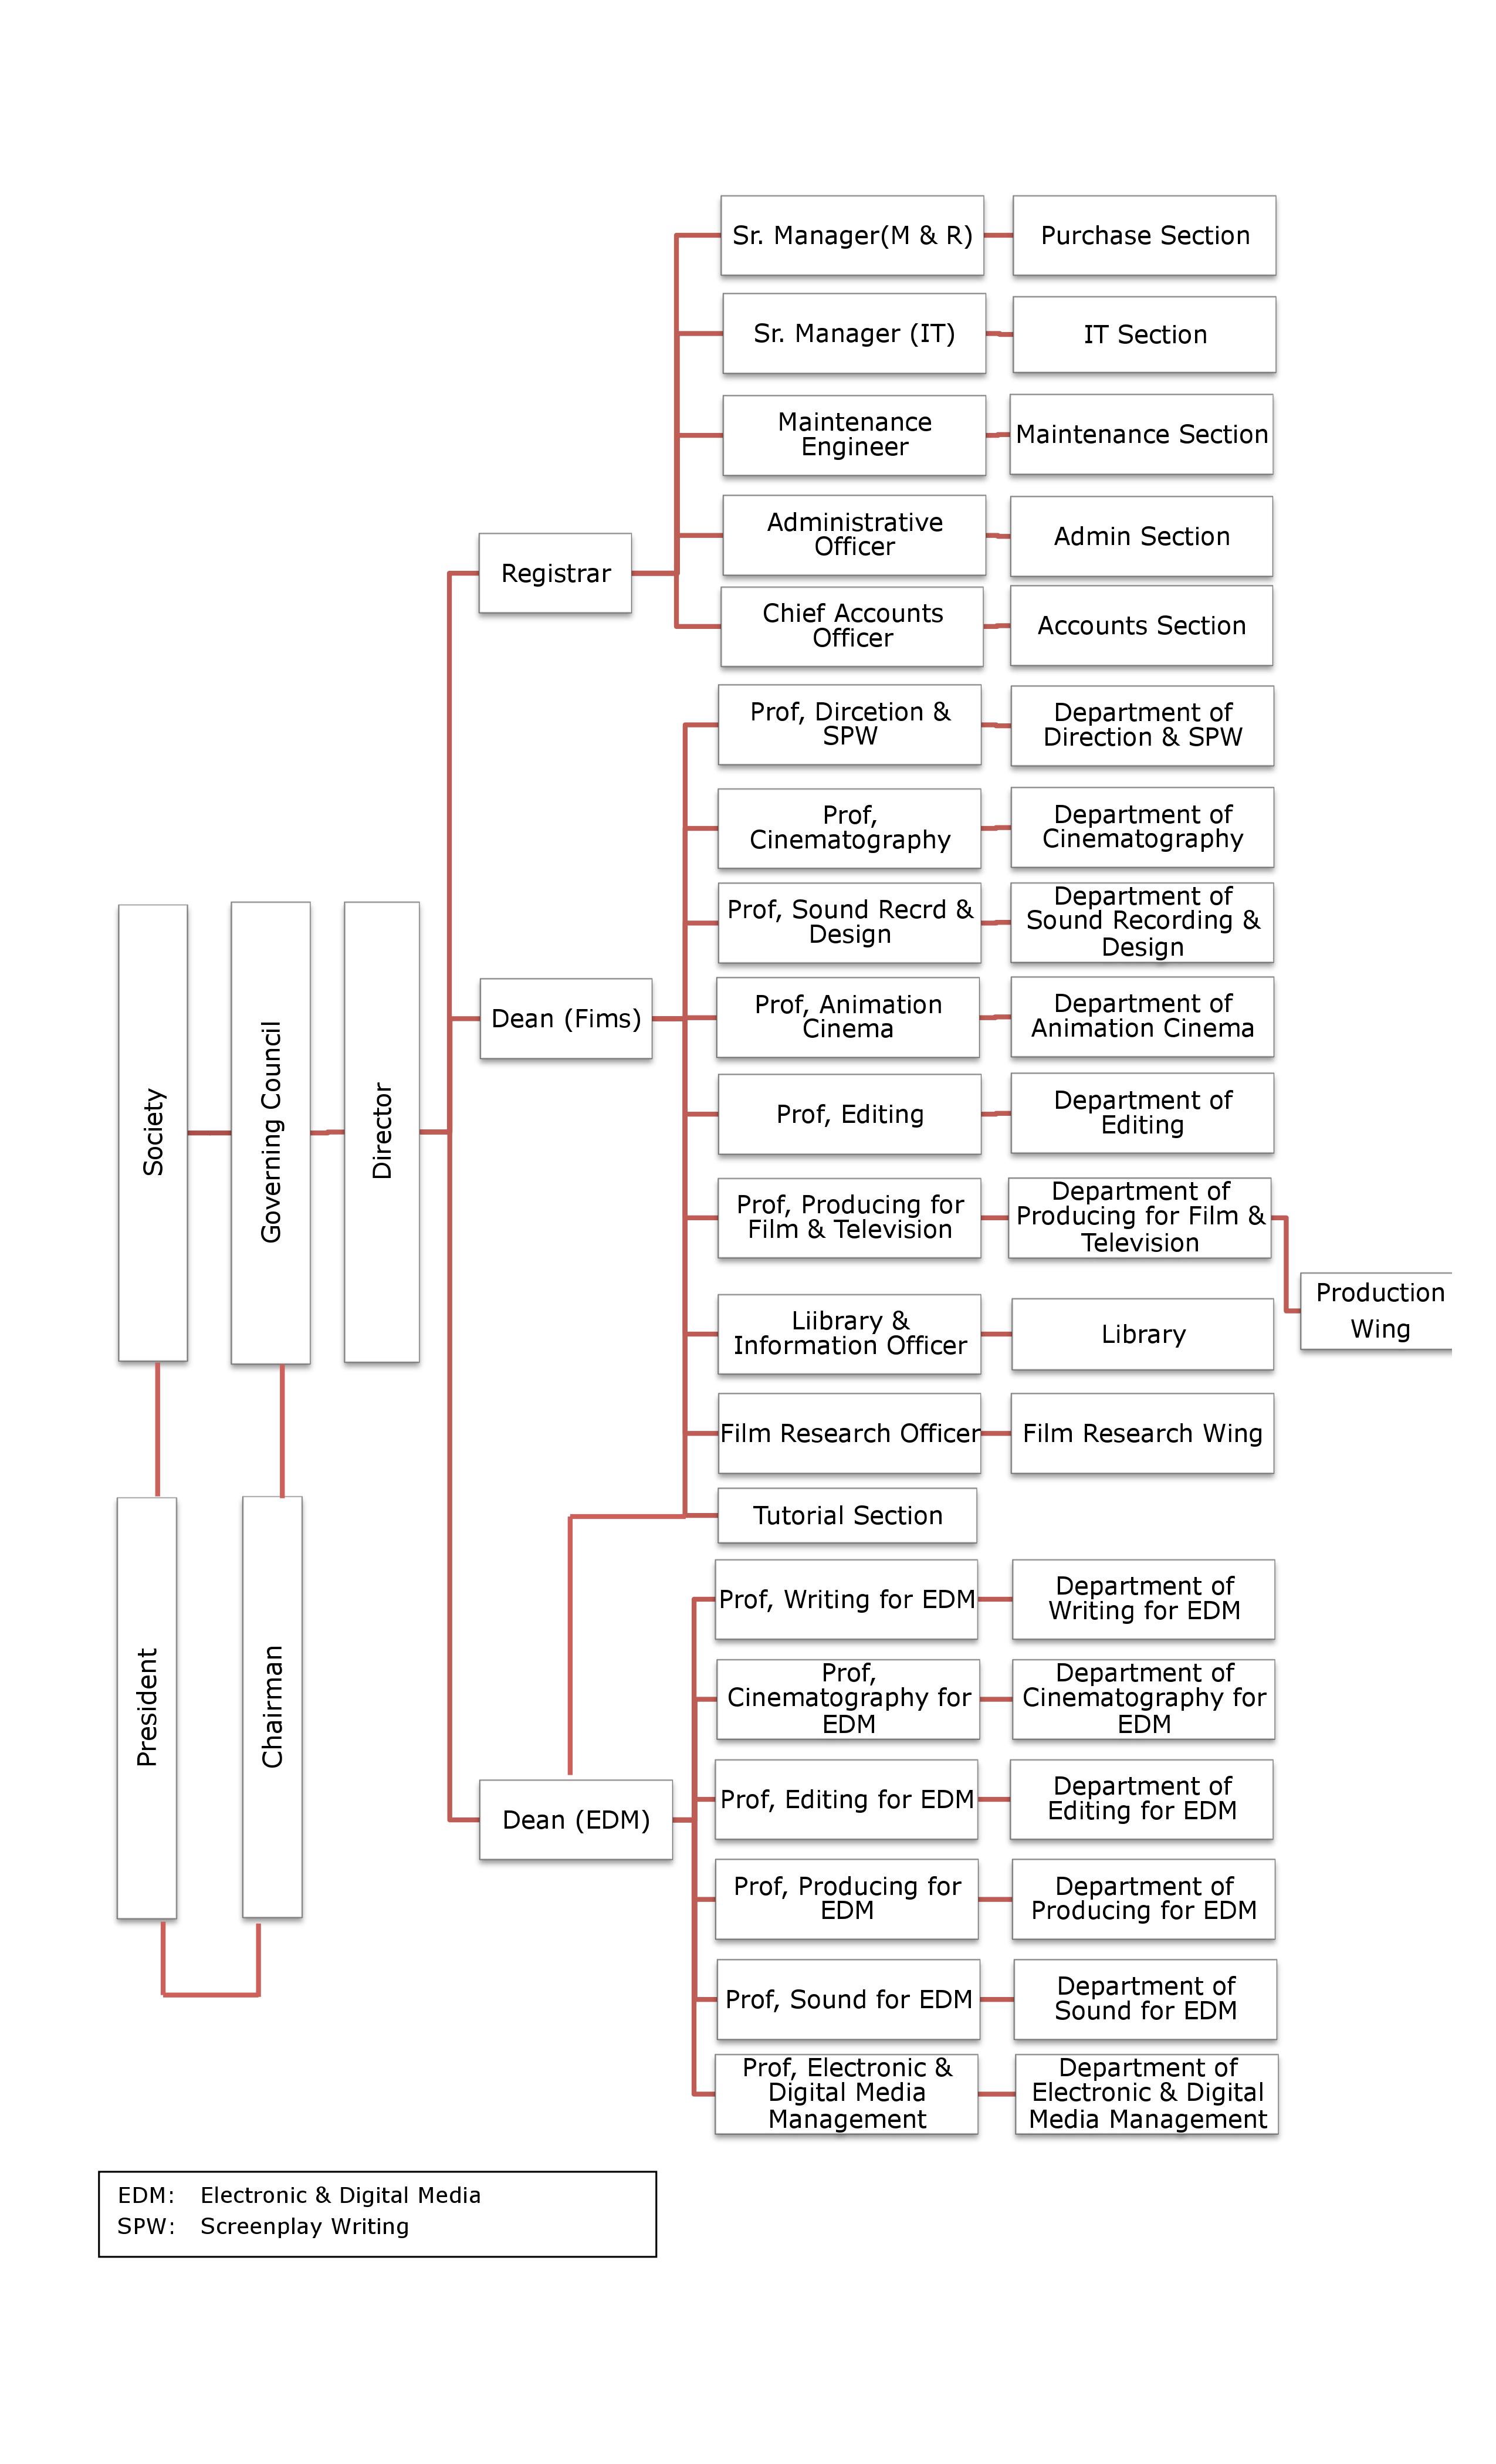 image showing organizational structure of srfti